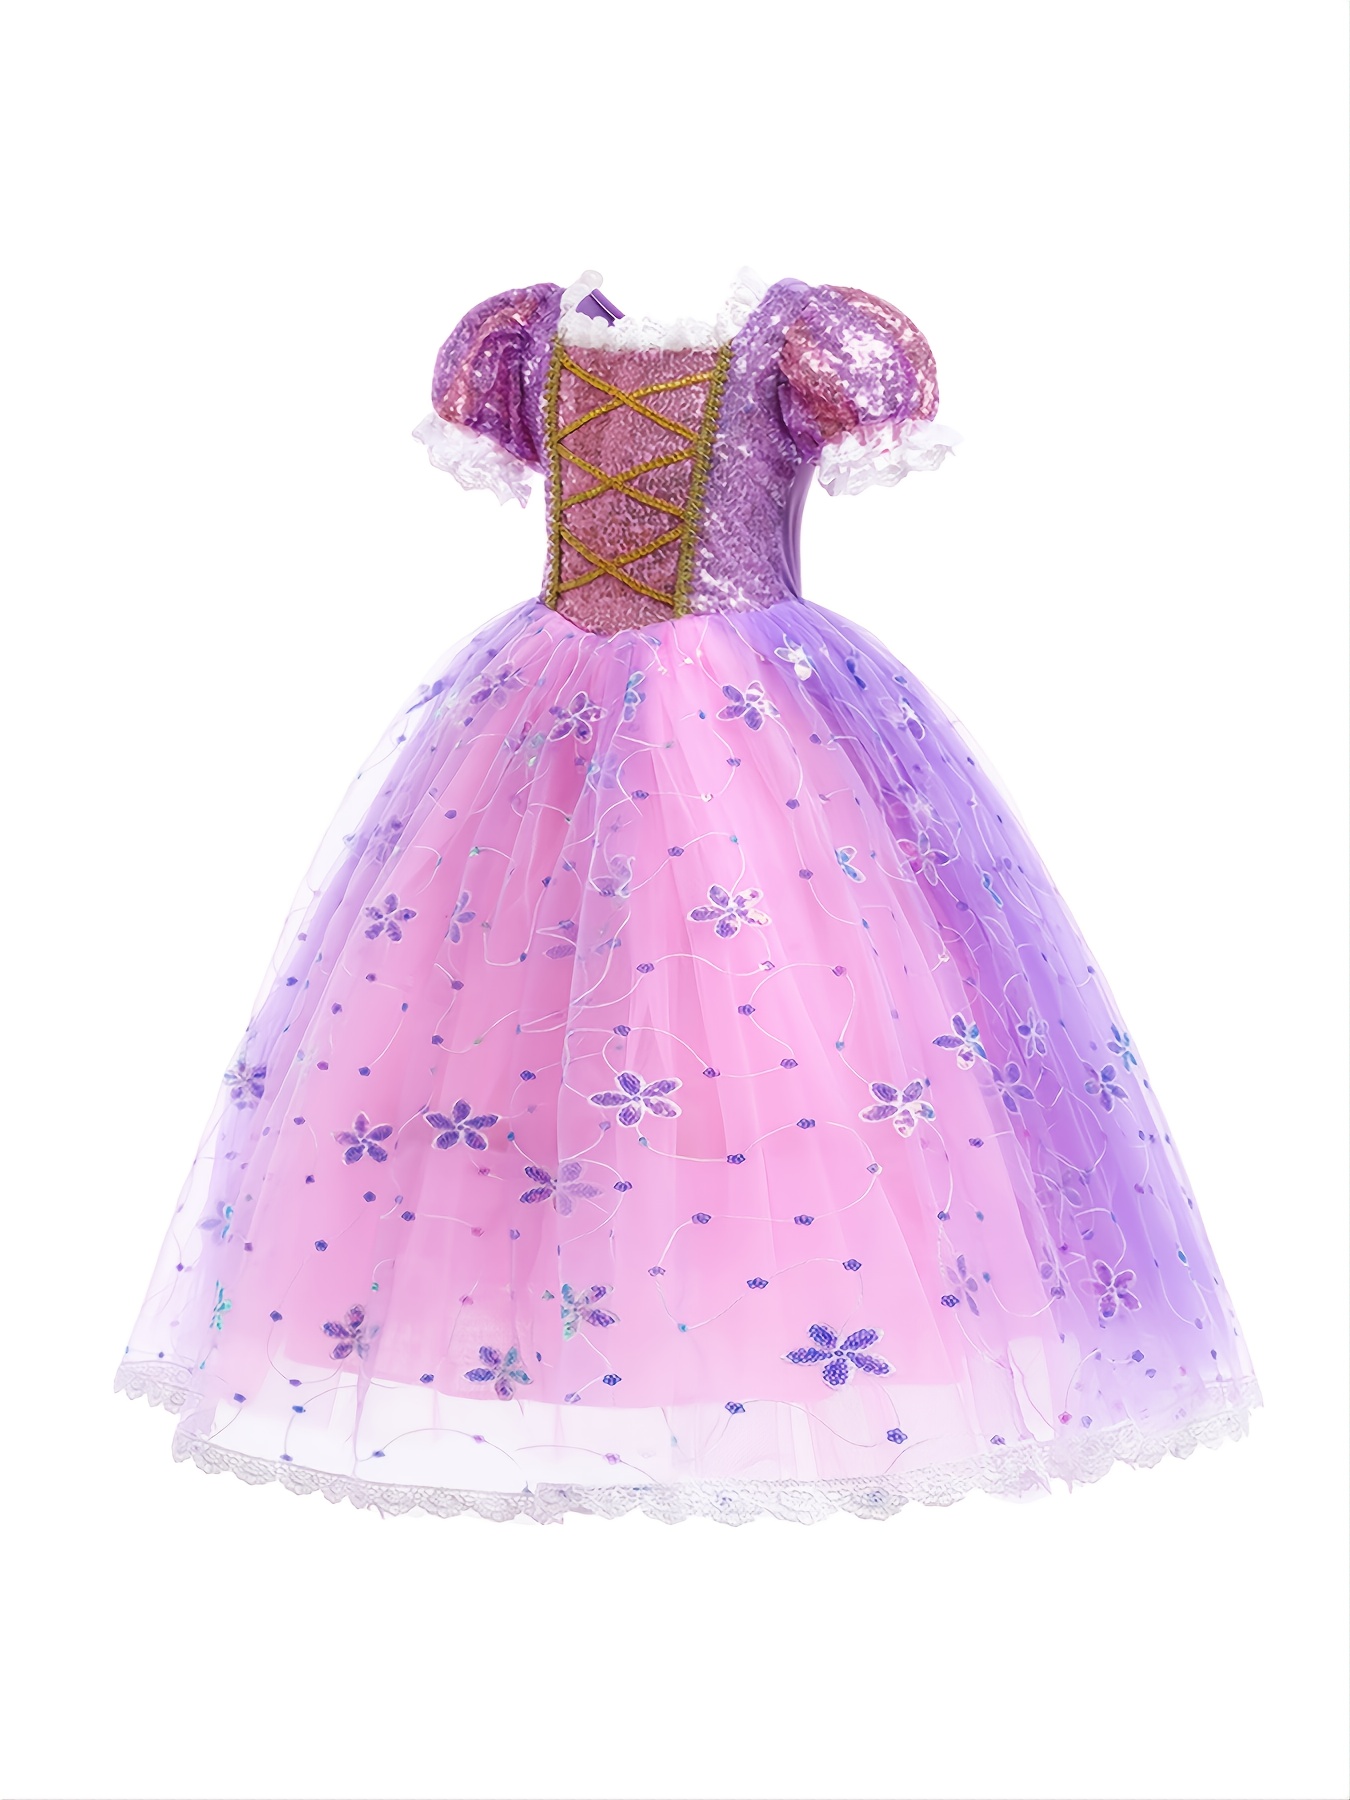 Acheter Robe de princesse pour filles, Costume Sofia, robe